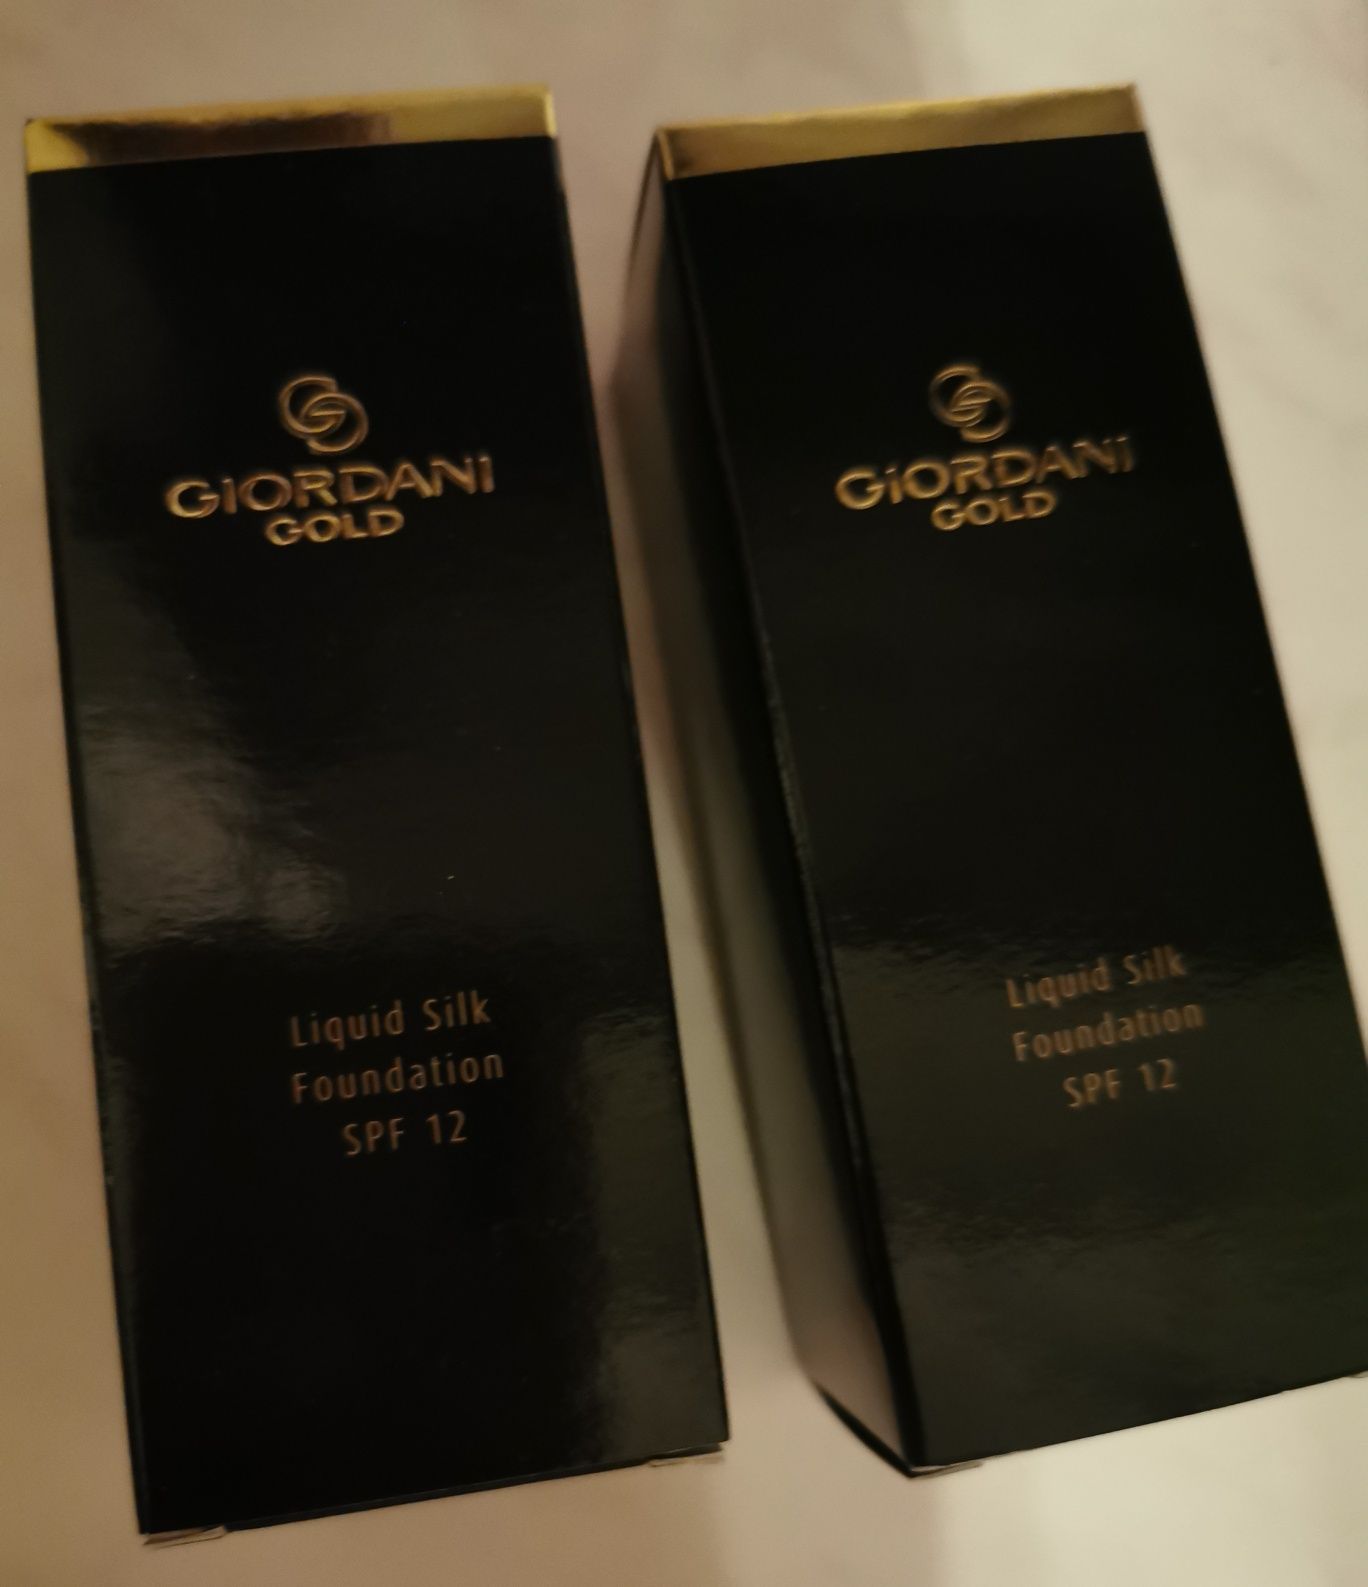 Podkład Liquid Silk Giordani Gold od Oriflame, okazja! Light Ivory